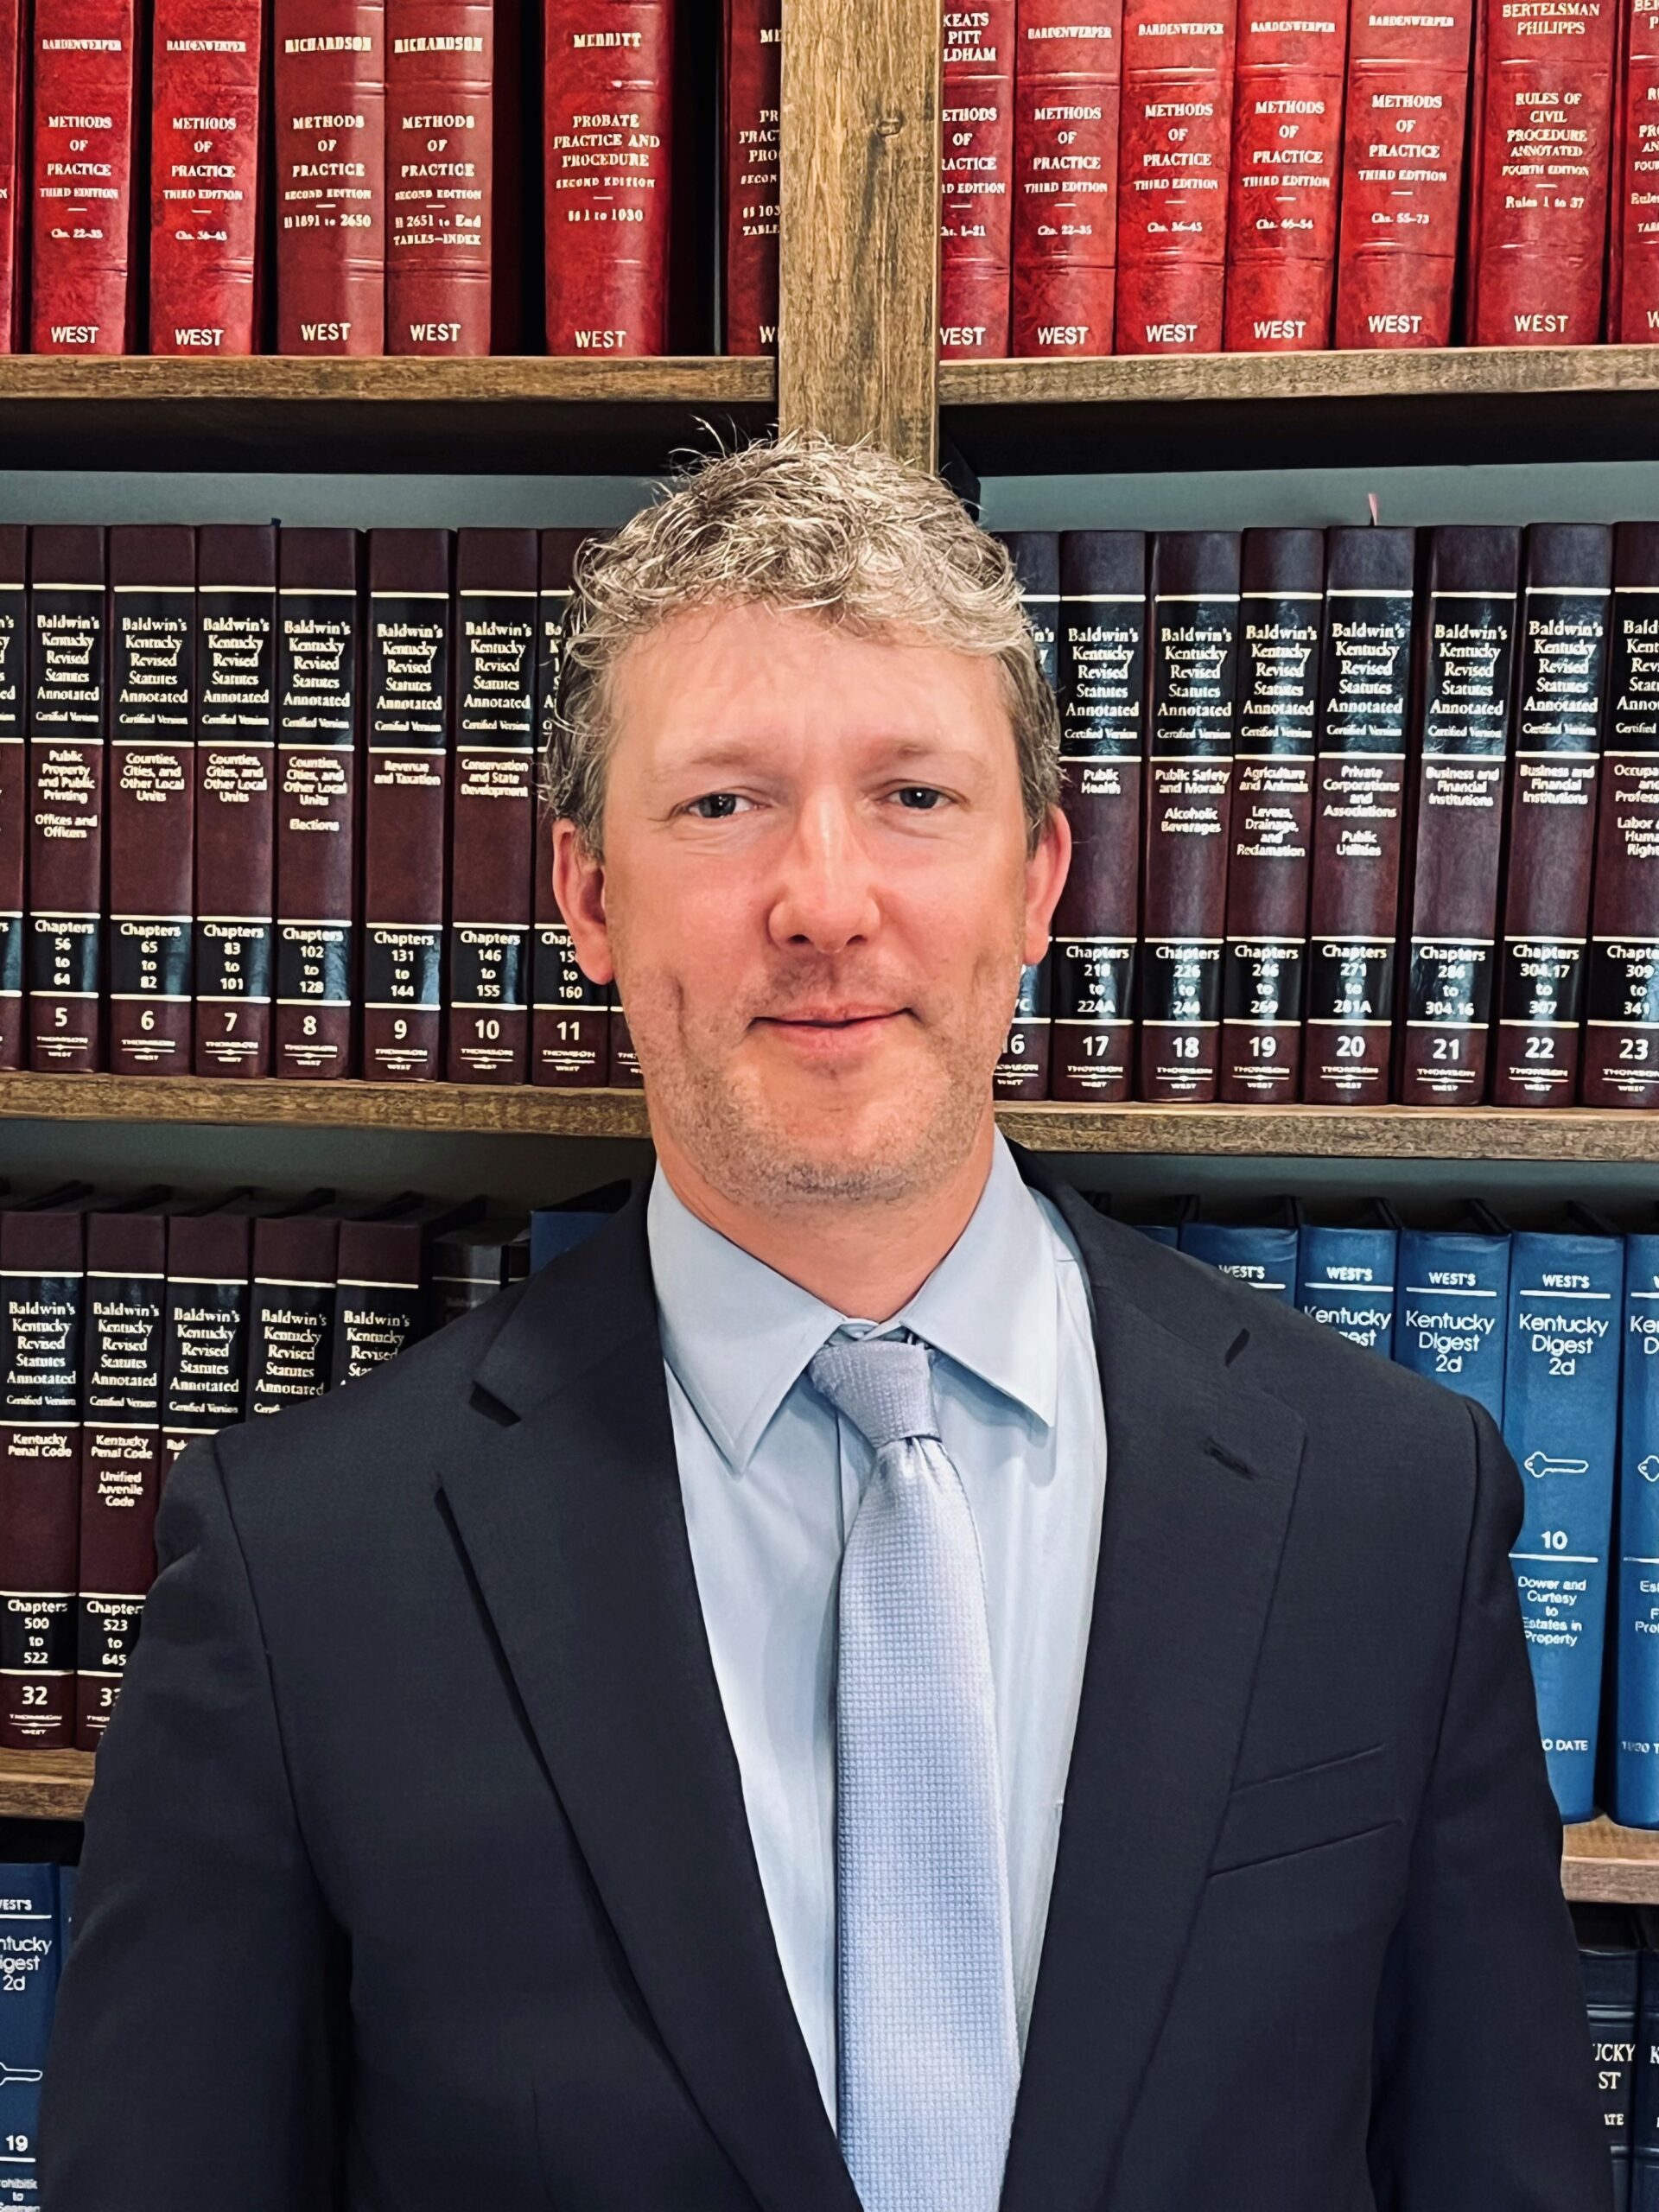 G. Adam Redden
Personal Injury Lawyer